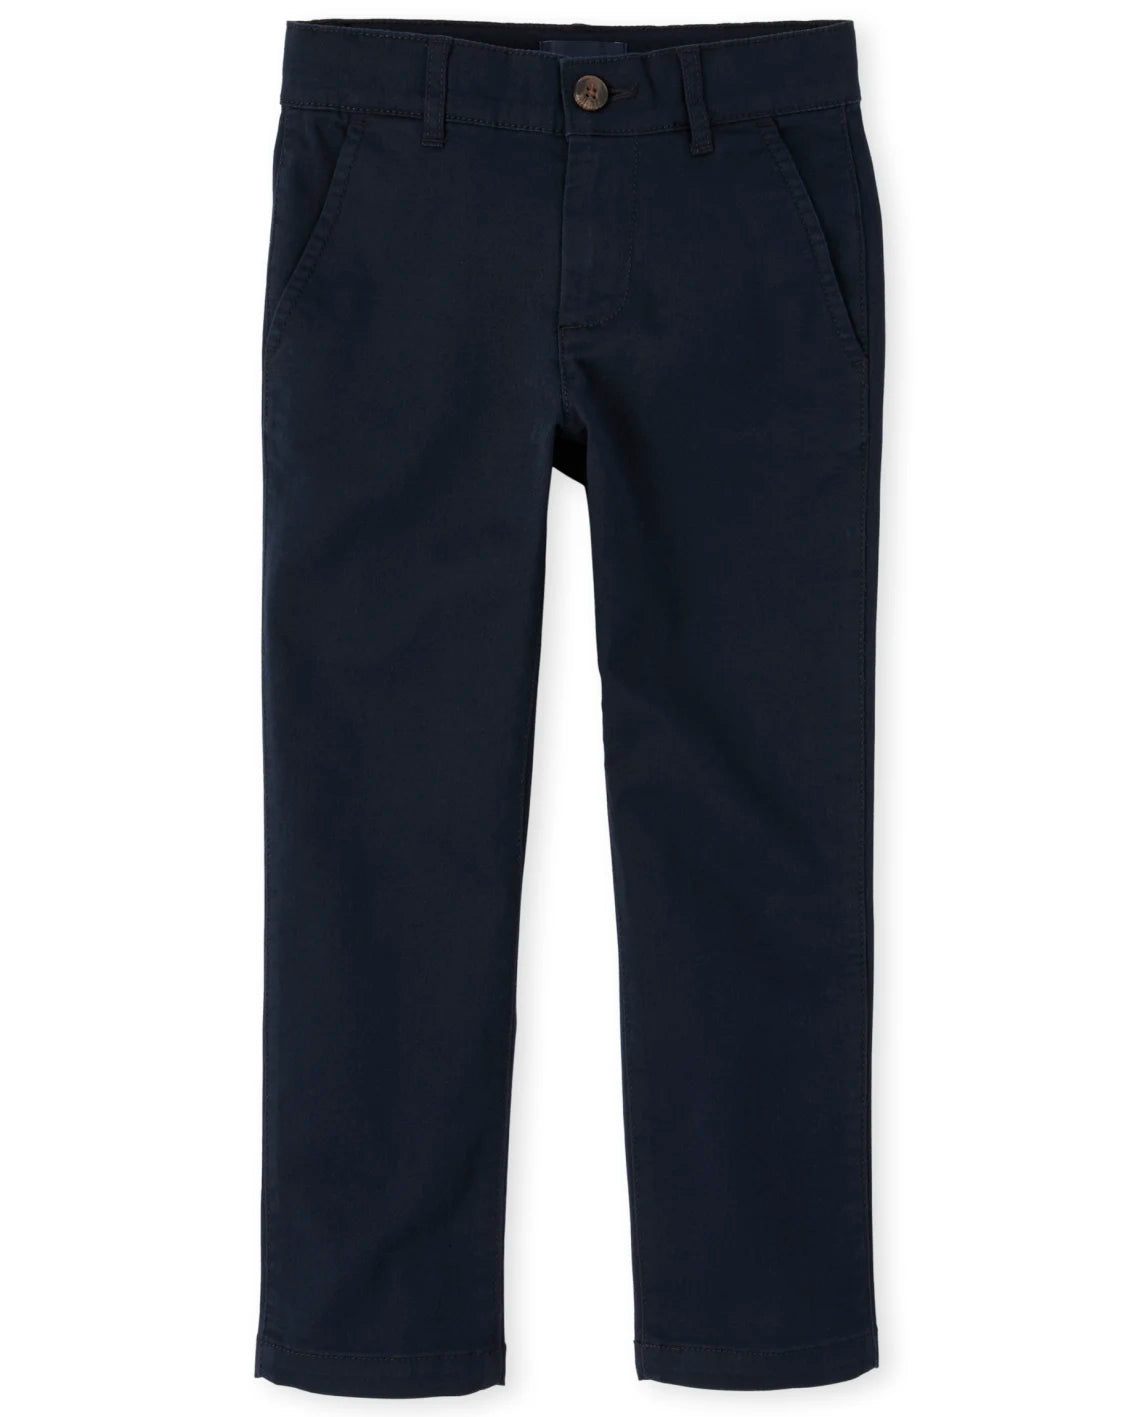 Pantalon azul tela formal childrens place niño 4-16 skinny sin elástico atrás